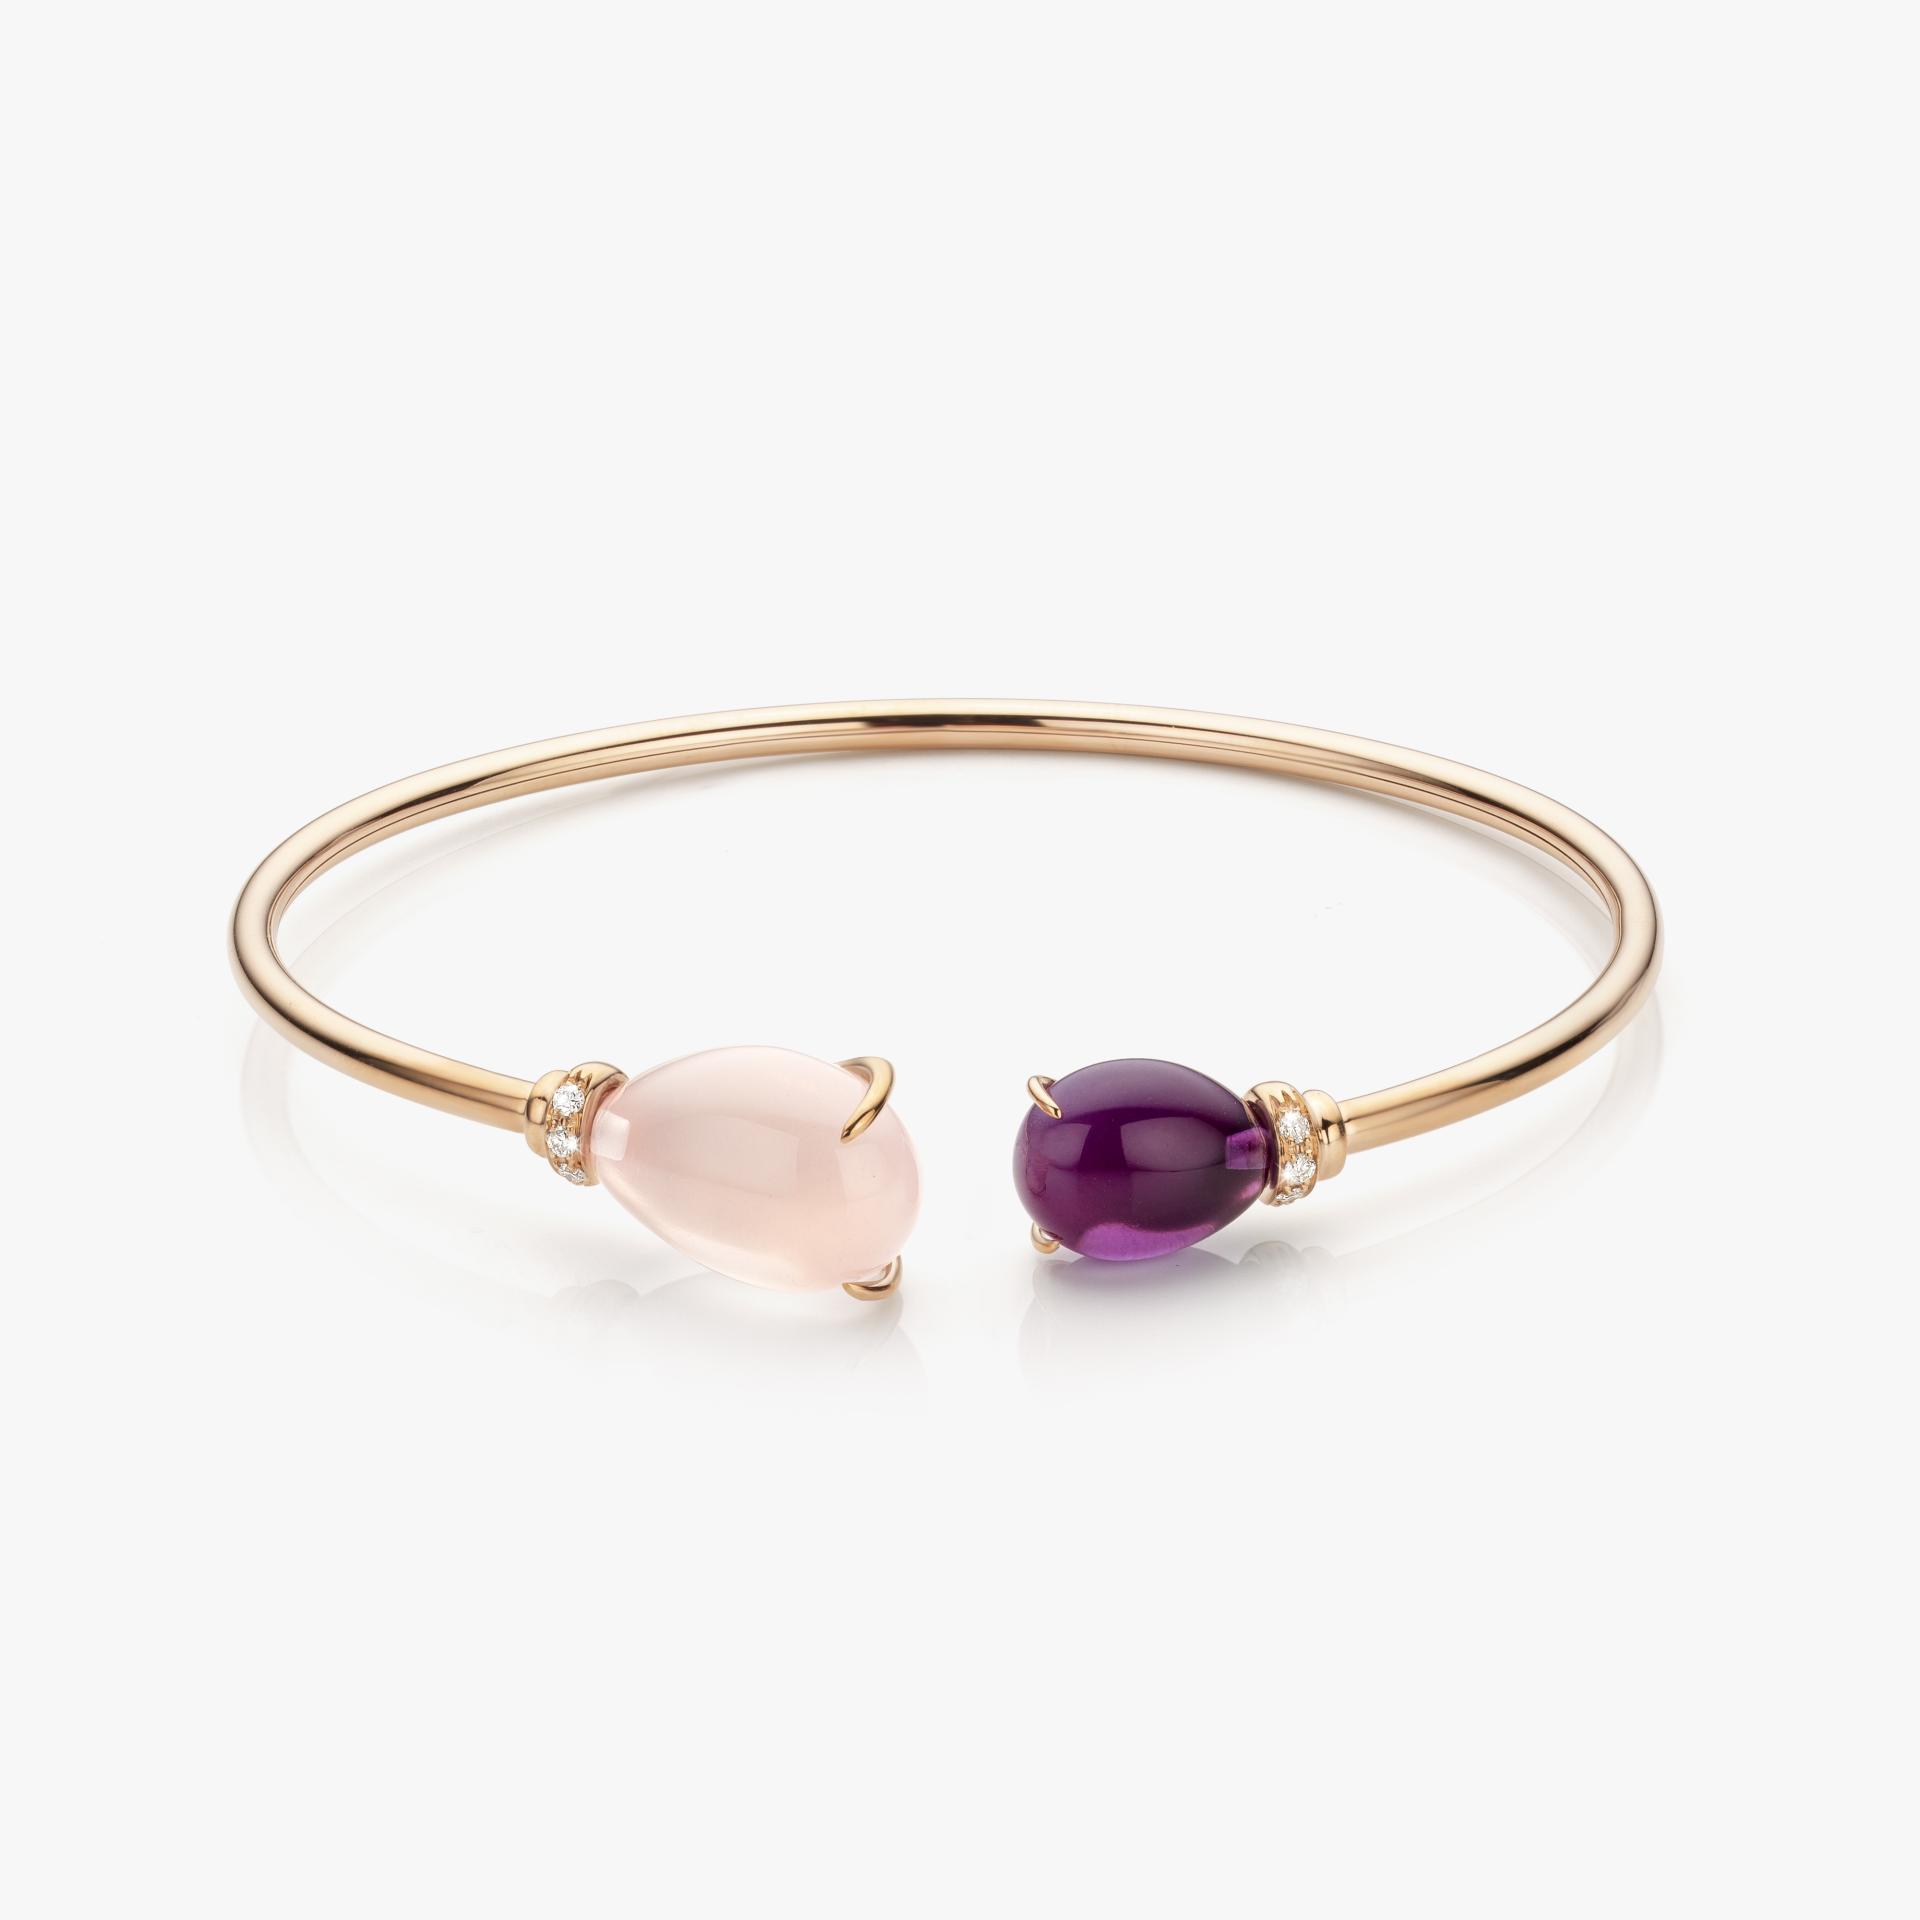 Rose gold bracelet set with pink quartz, amethyst and diamonds made by Maison De Greef